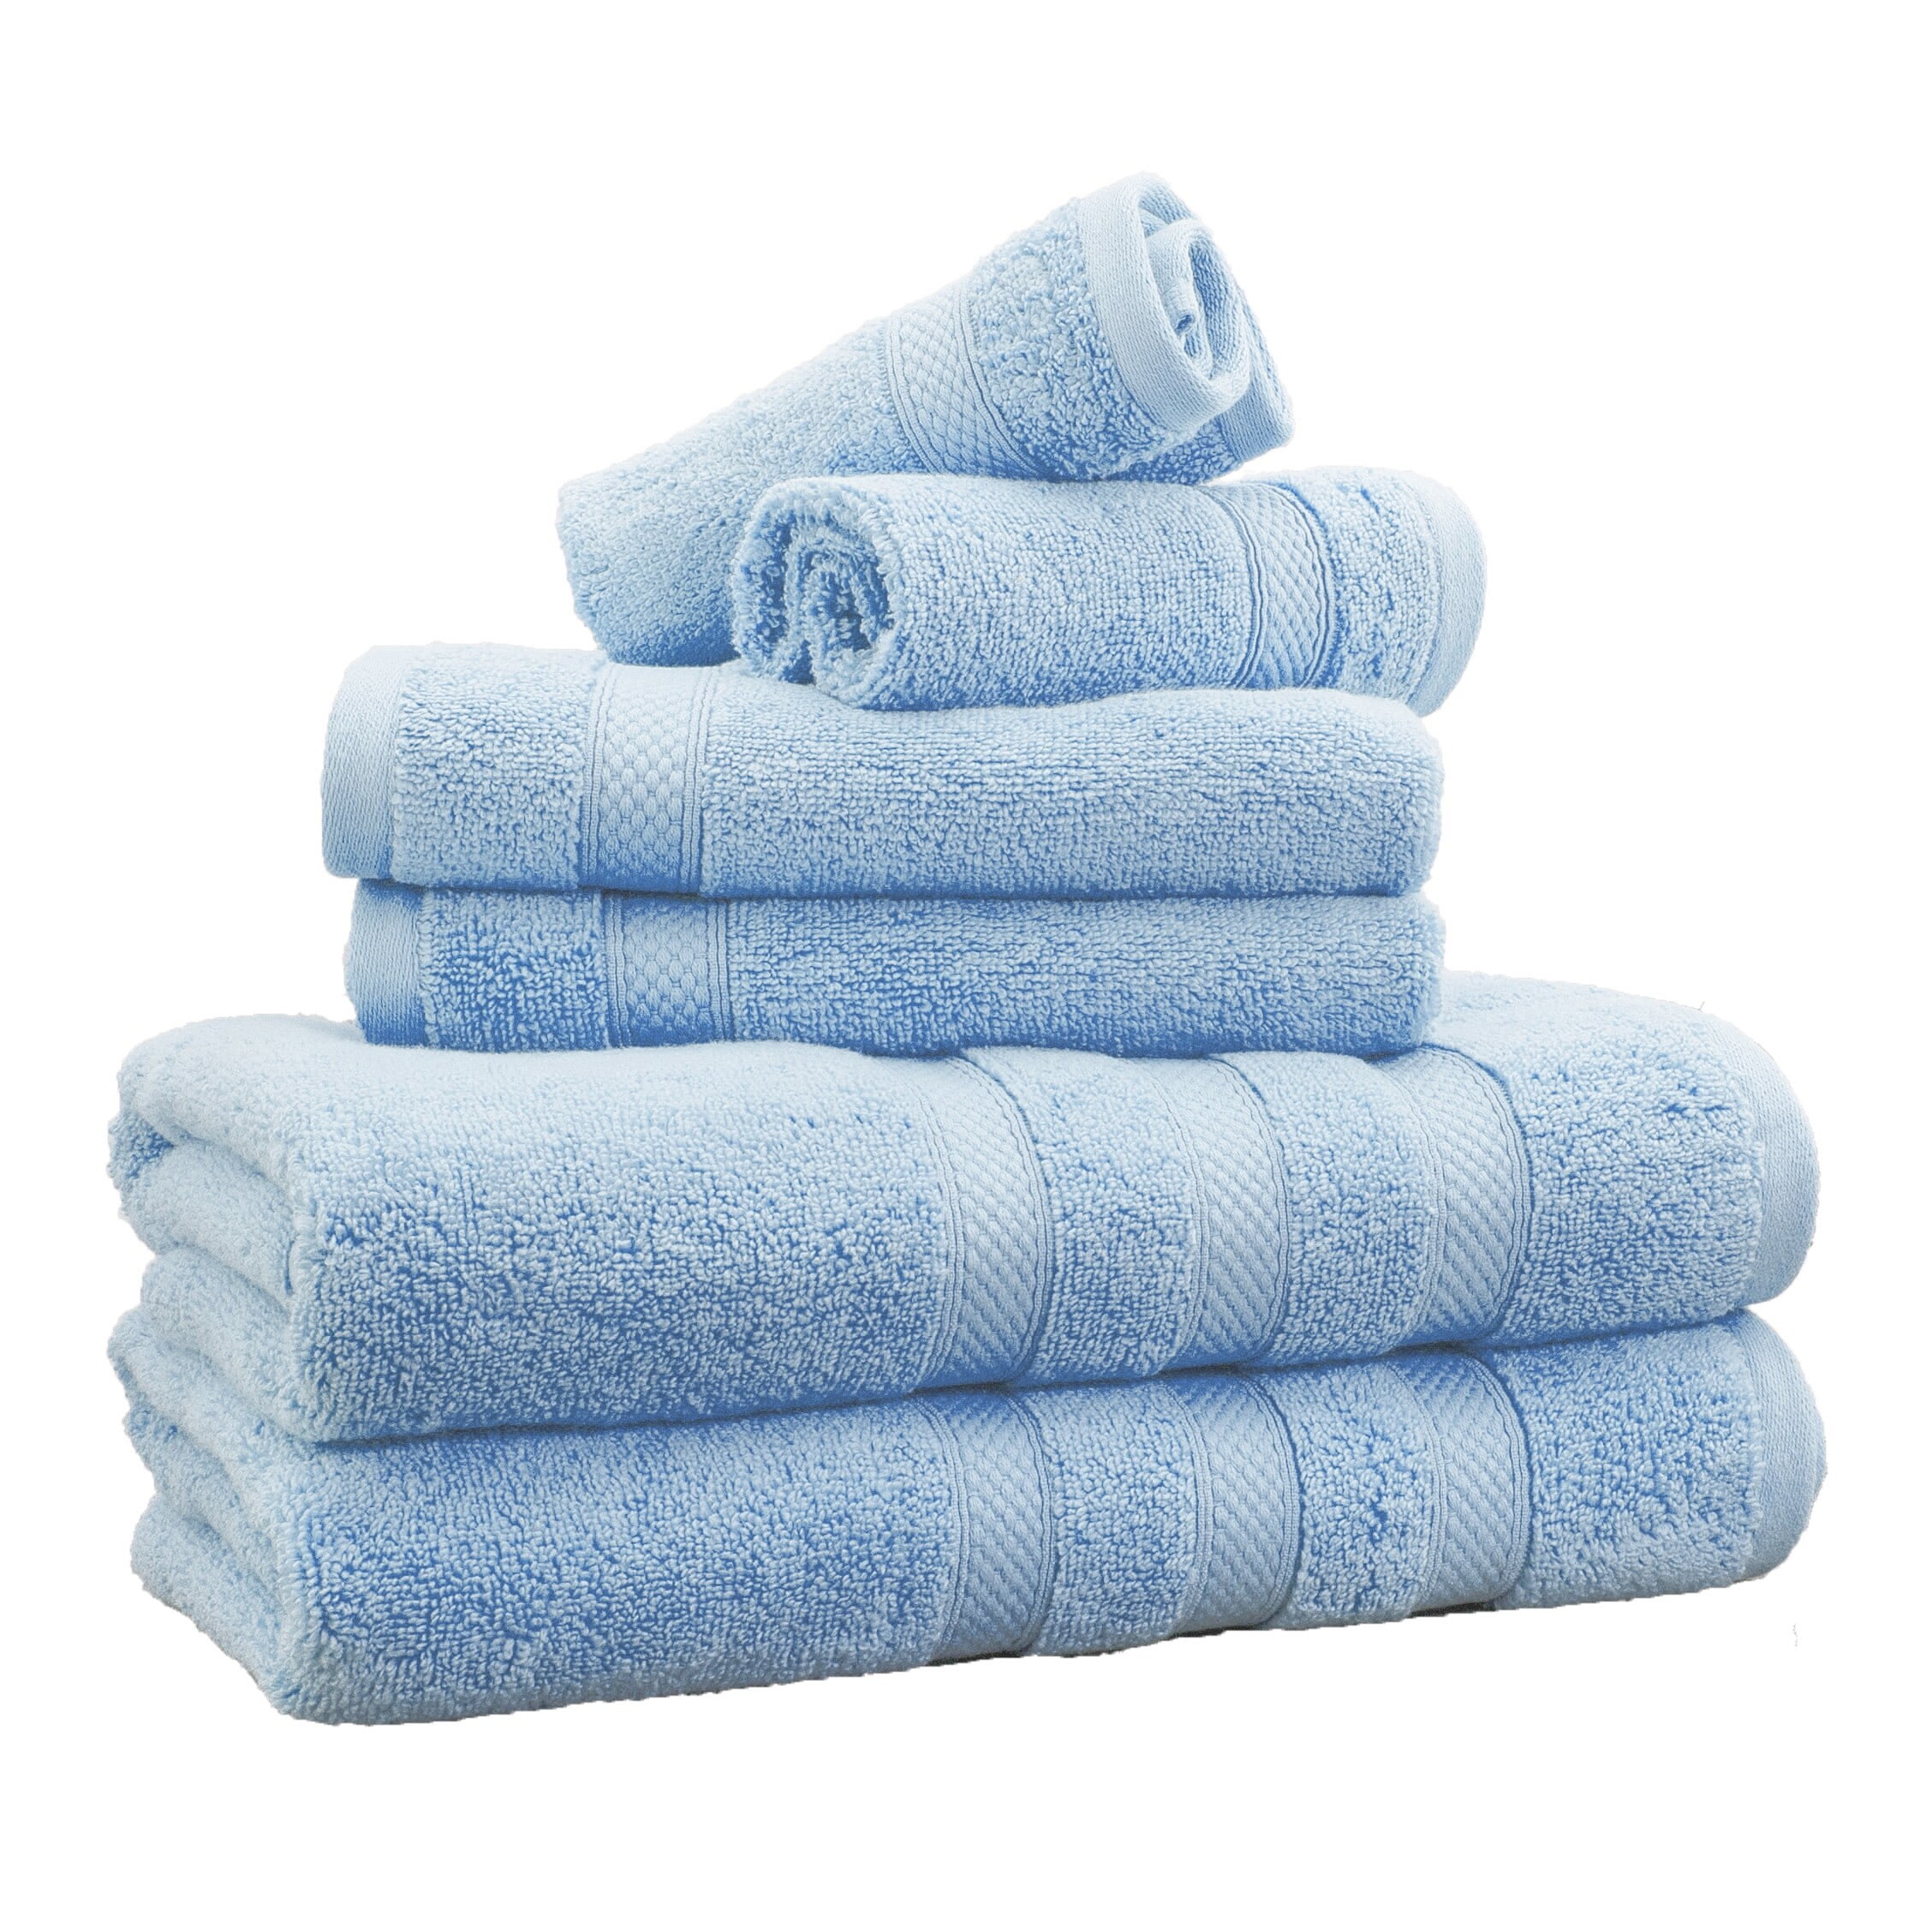 Softerry Premium Plush Bath Towel Set - 100% Soft Cotton - Baby Skin Extra  Absorbent Zero Twist High Performance - Luxury Hotel & Spa Quality - Fade